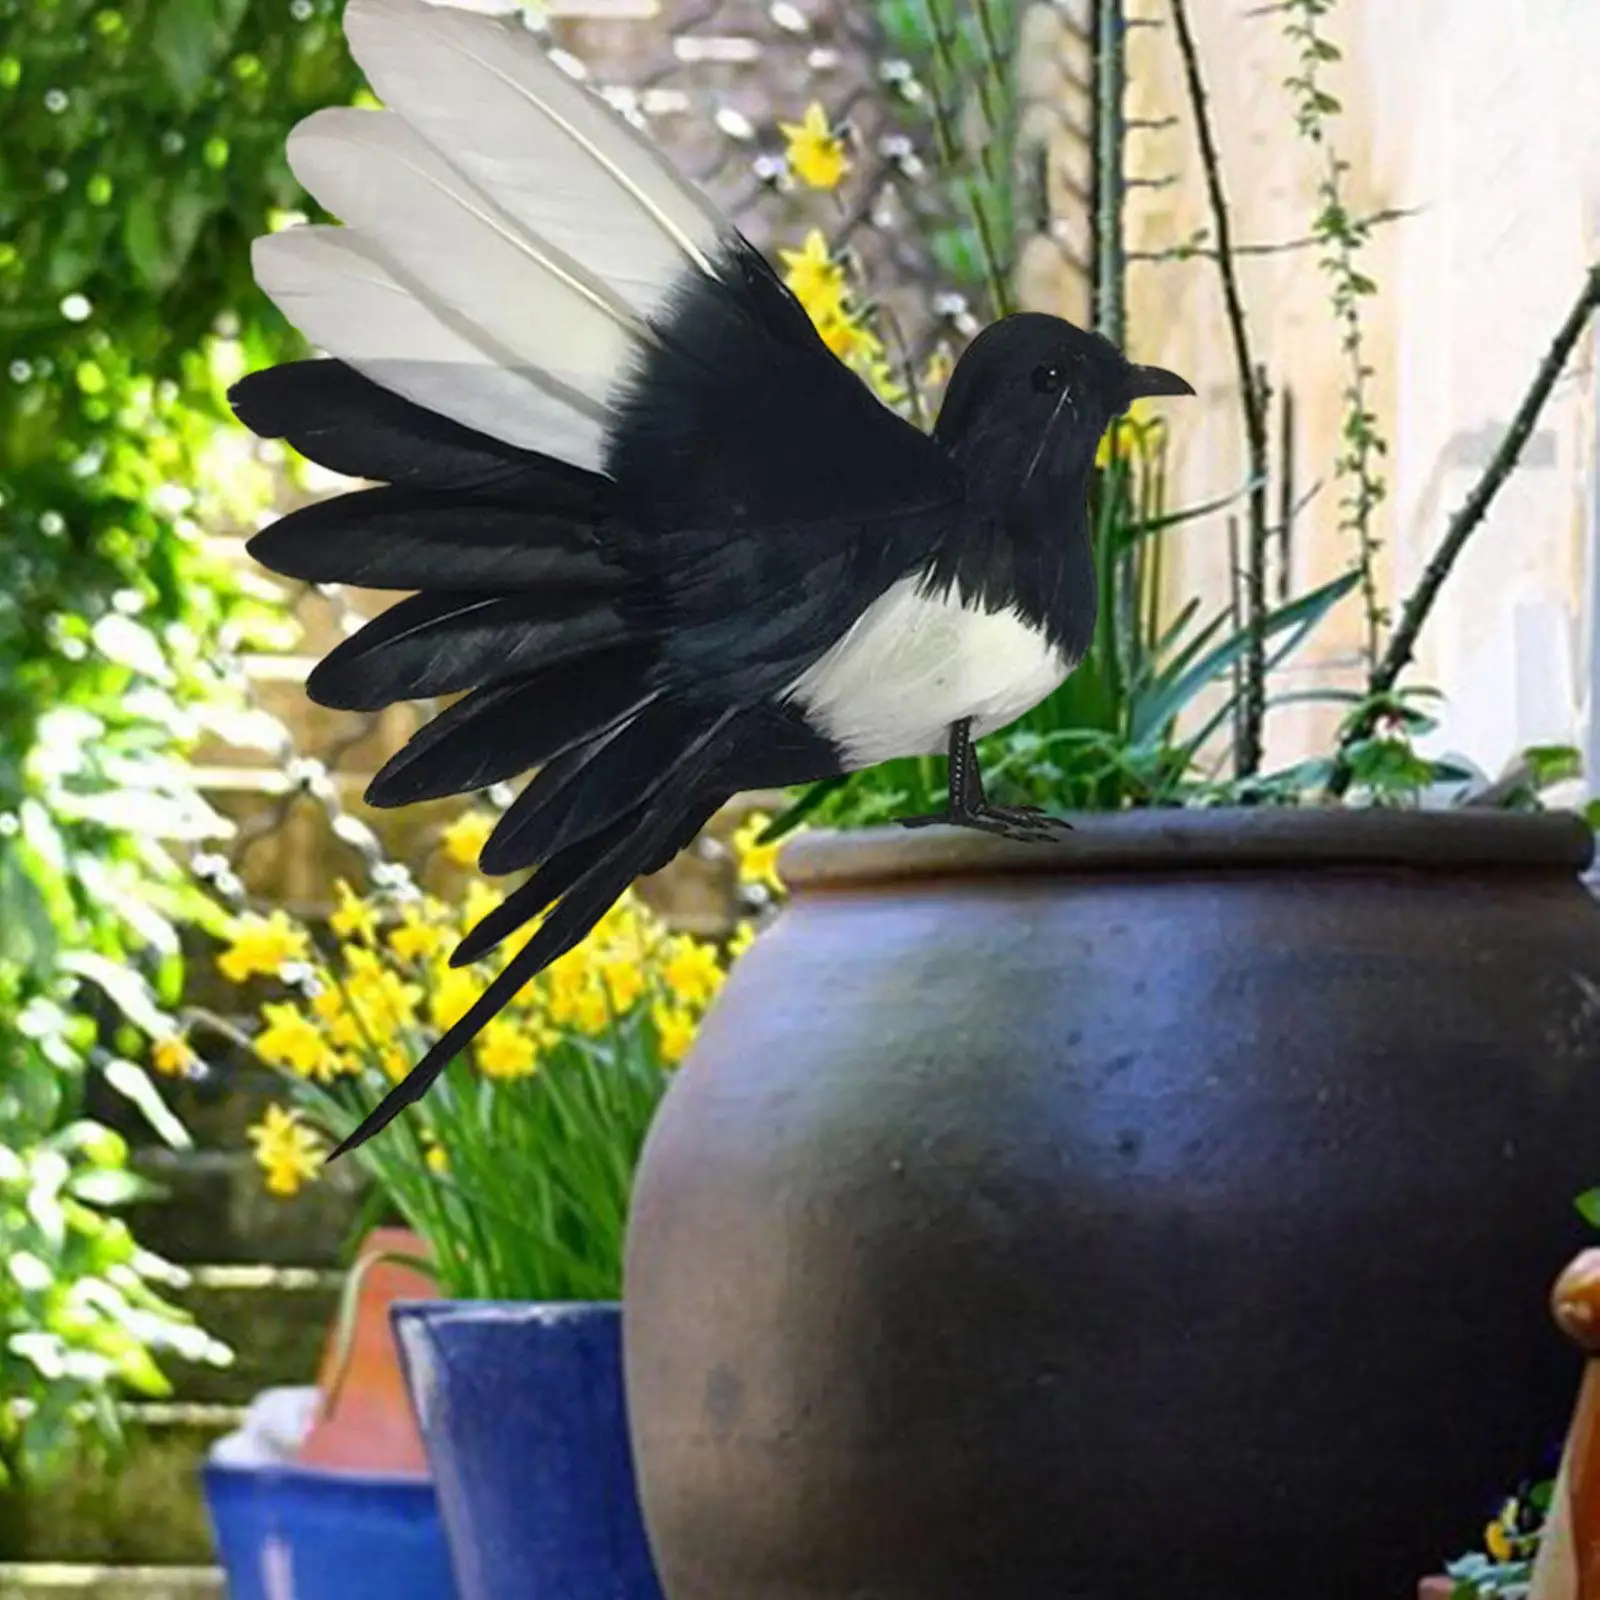 Magpie Simulation Bird Garden Ornament Crafts Bird Statue Artificial Feather Model for Lawn Yard Art Courtyard Outdoor